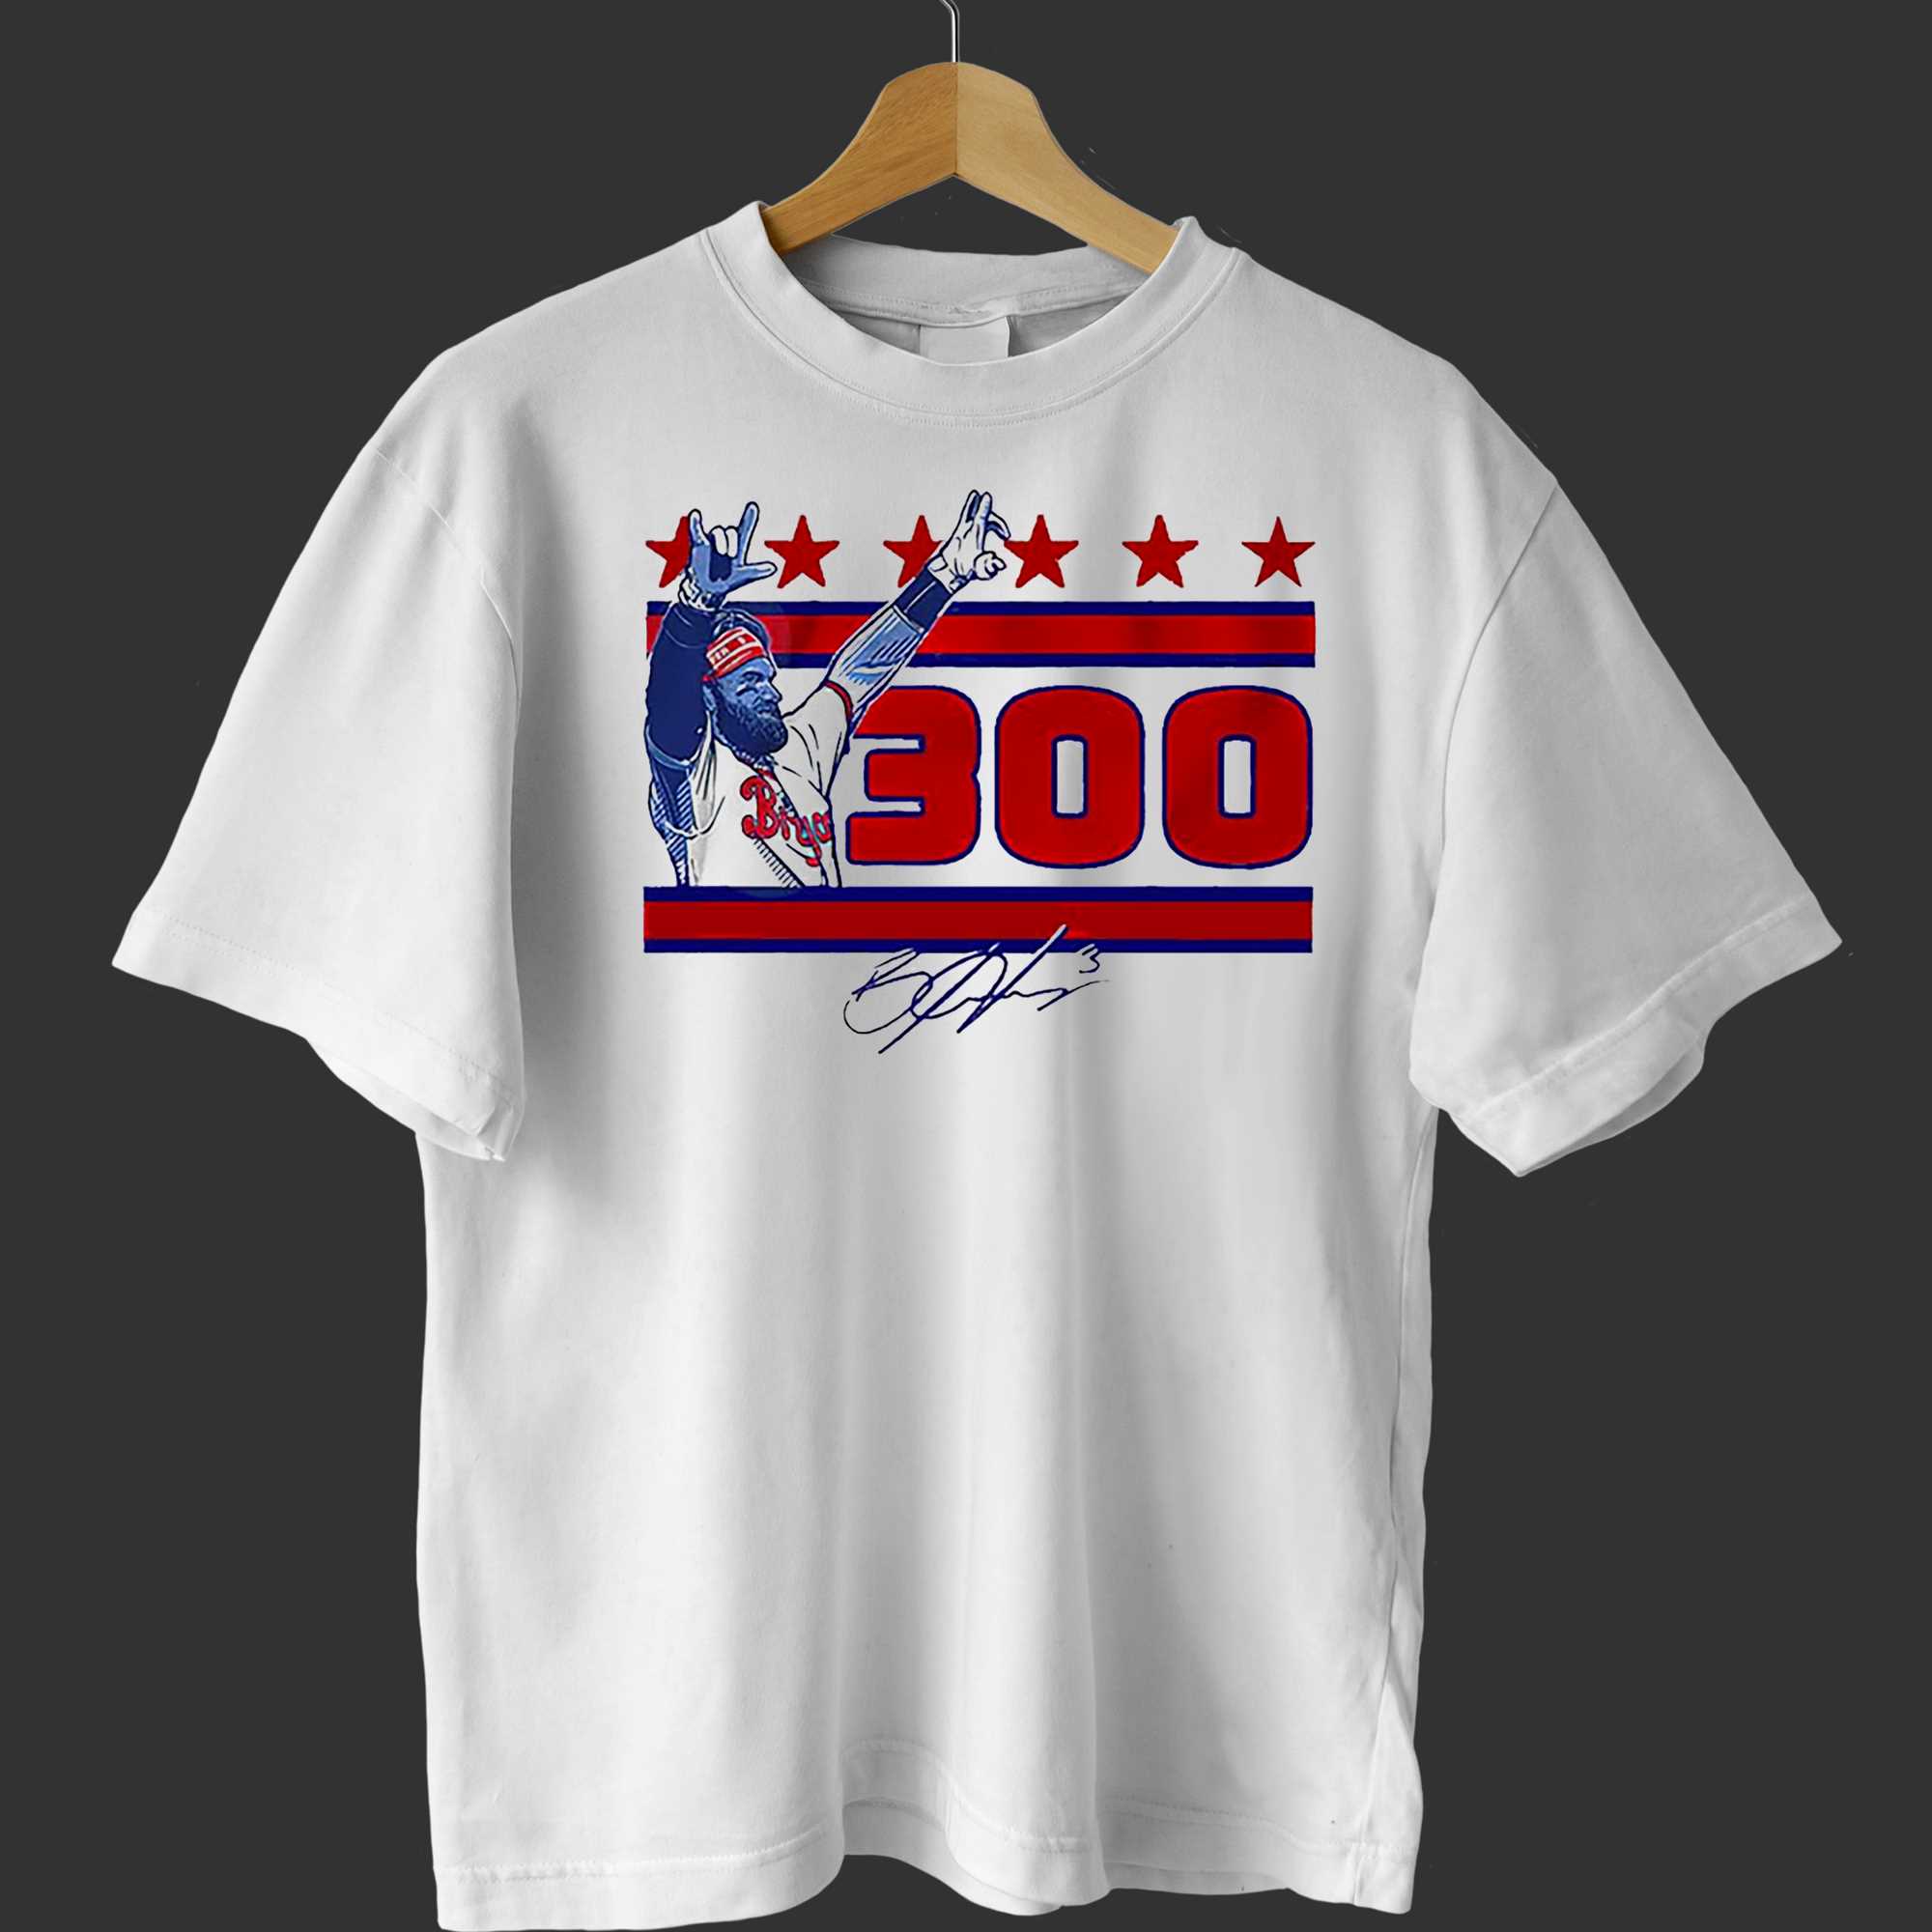 Bryce Harper 300 Philadelphia Phillies Signature Shirt - Shibtee Clothing